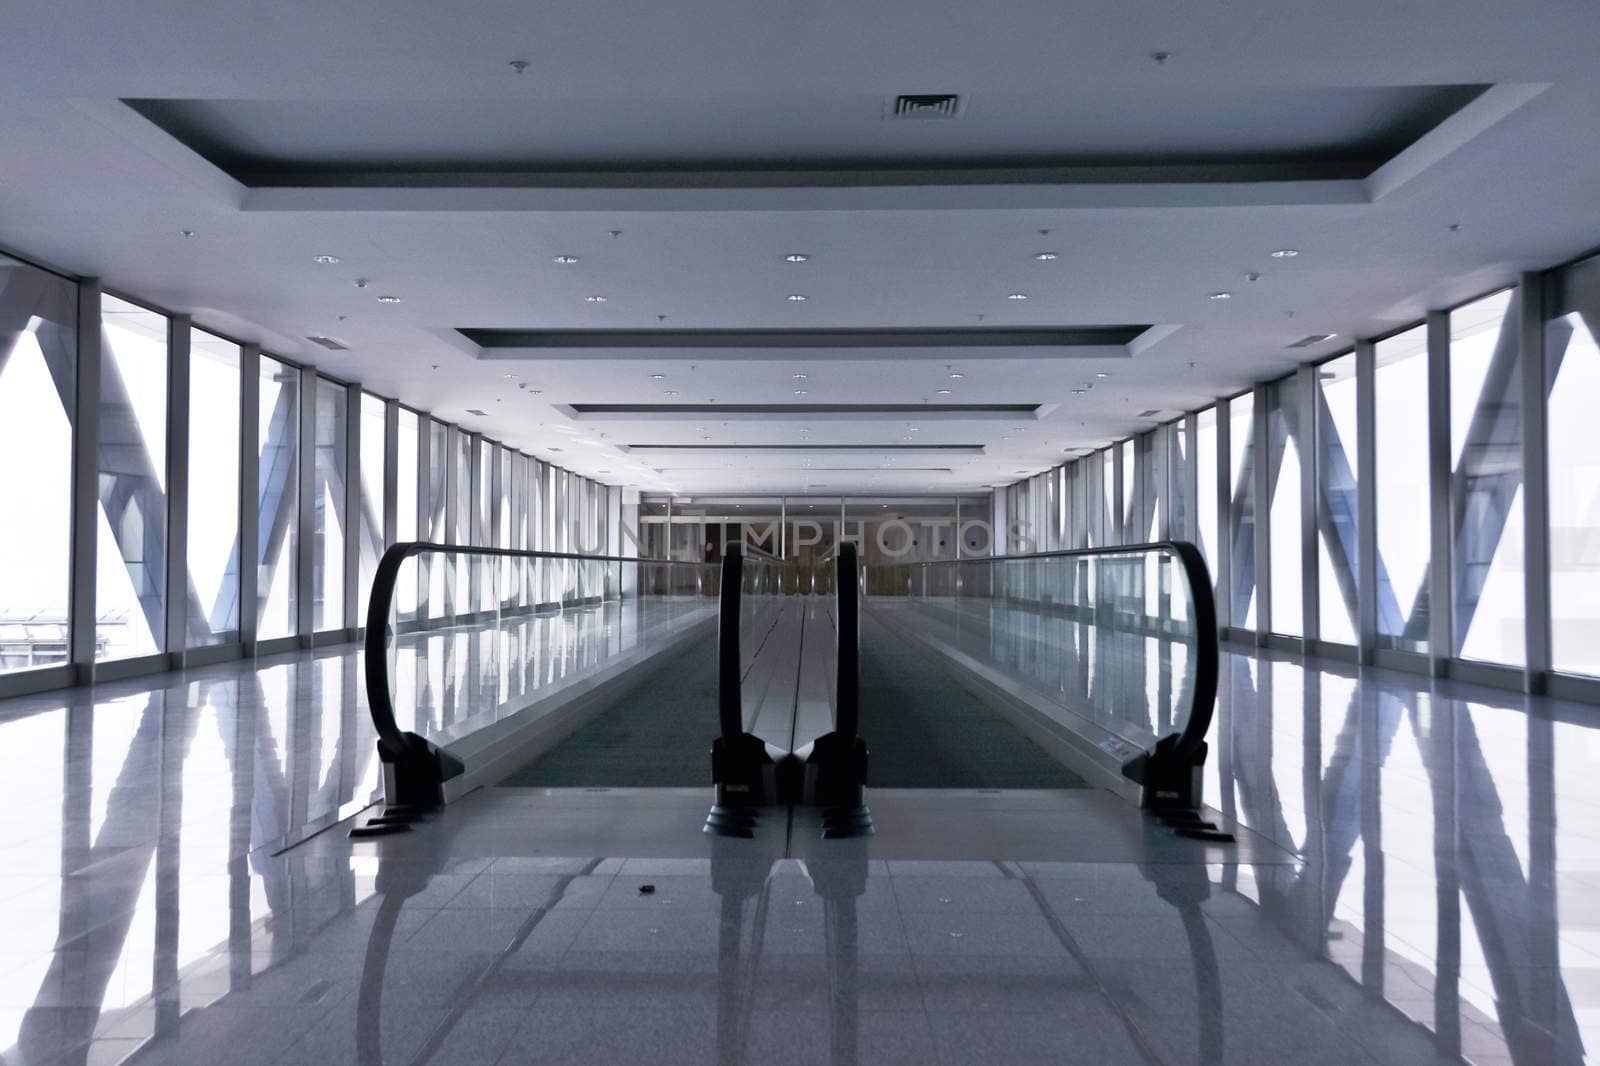 the empty escalator inside the contemporary building